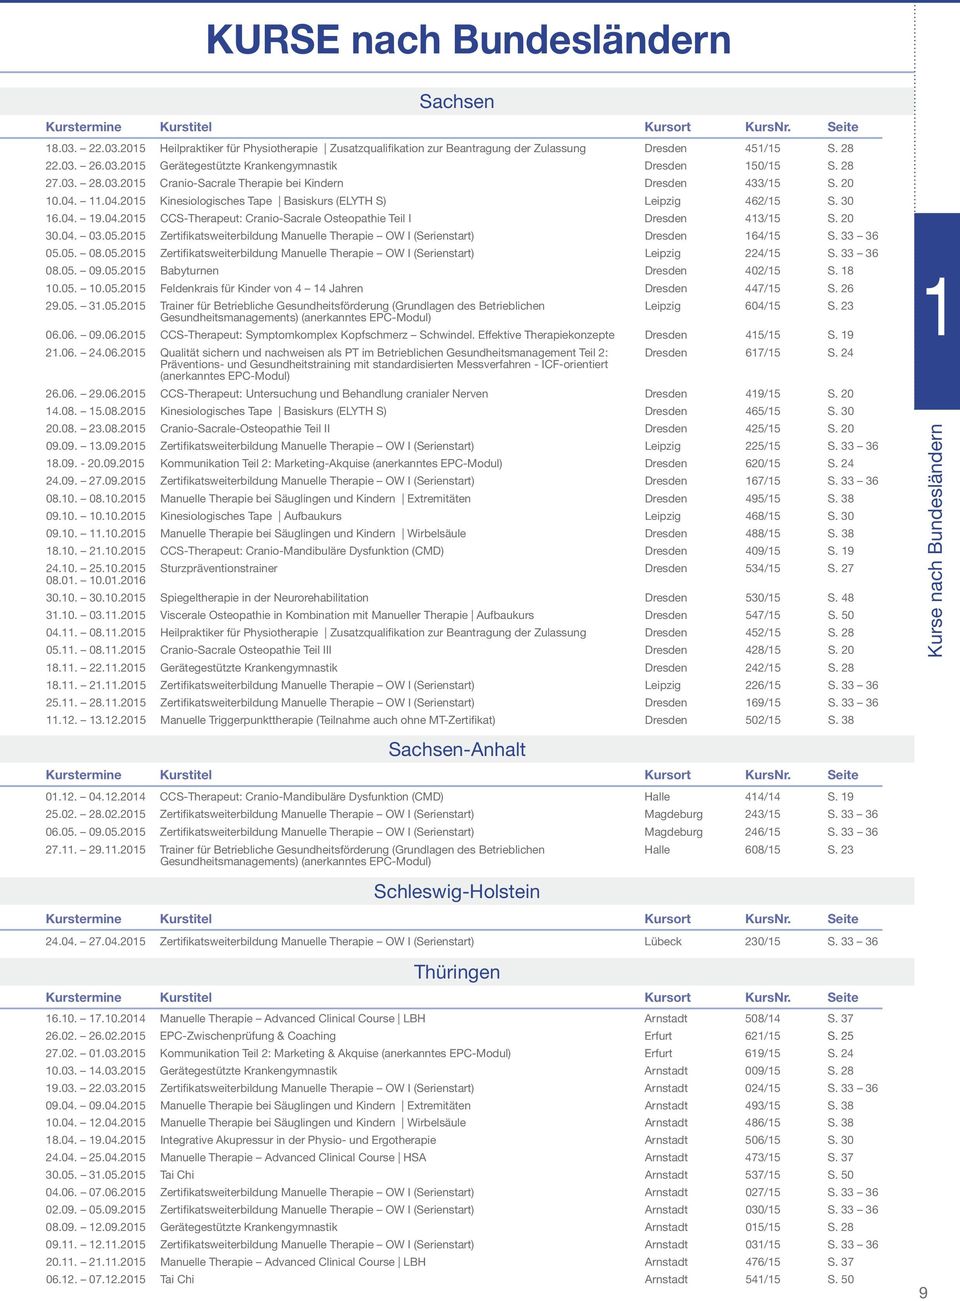 11.04.2015 Kinesiologisches Tape Basiskurs (ELYTH S) Leipzig 462/15 S. 30 16.04. 19.04.2015 CCS-Therapeut: Cranio-Sacrale Osteopathie Teil I Dresden 413/15 S. 20 30.04. 03.05.